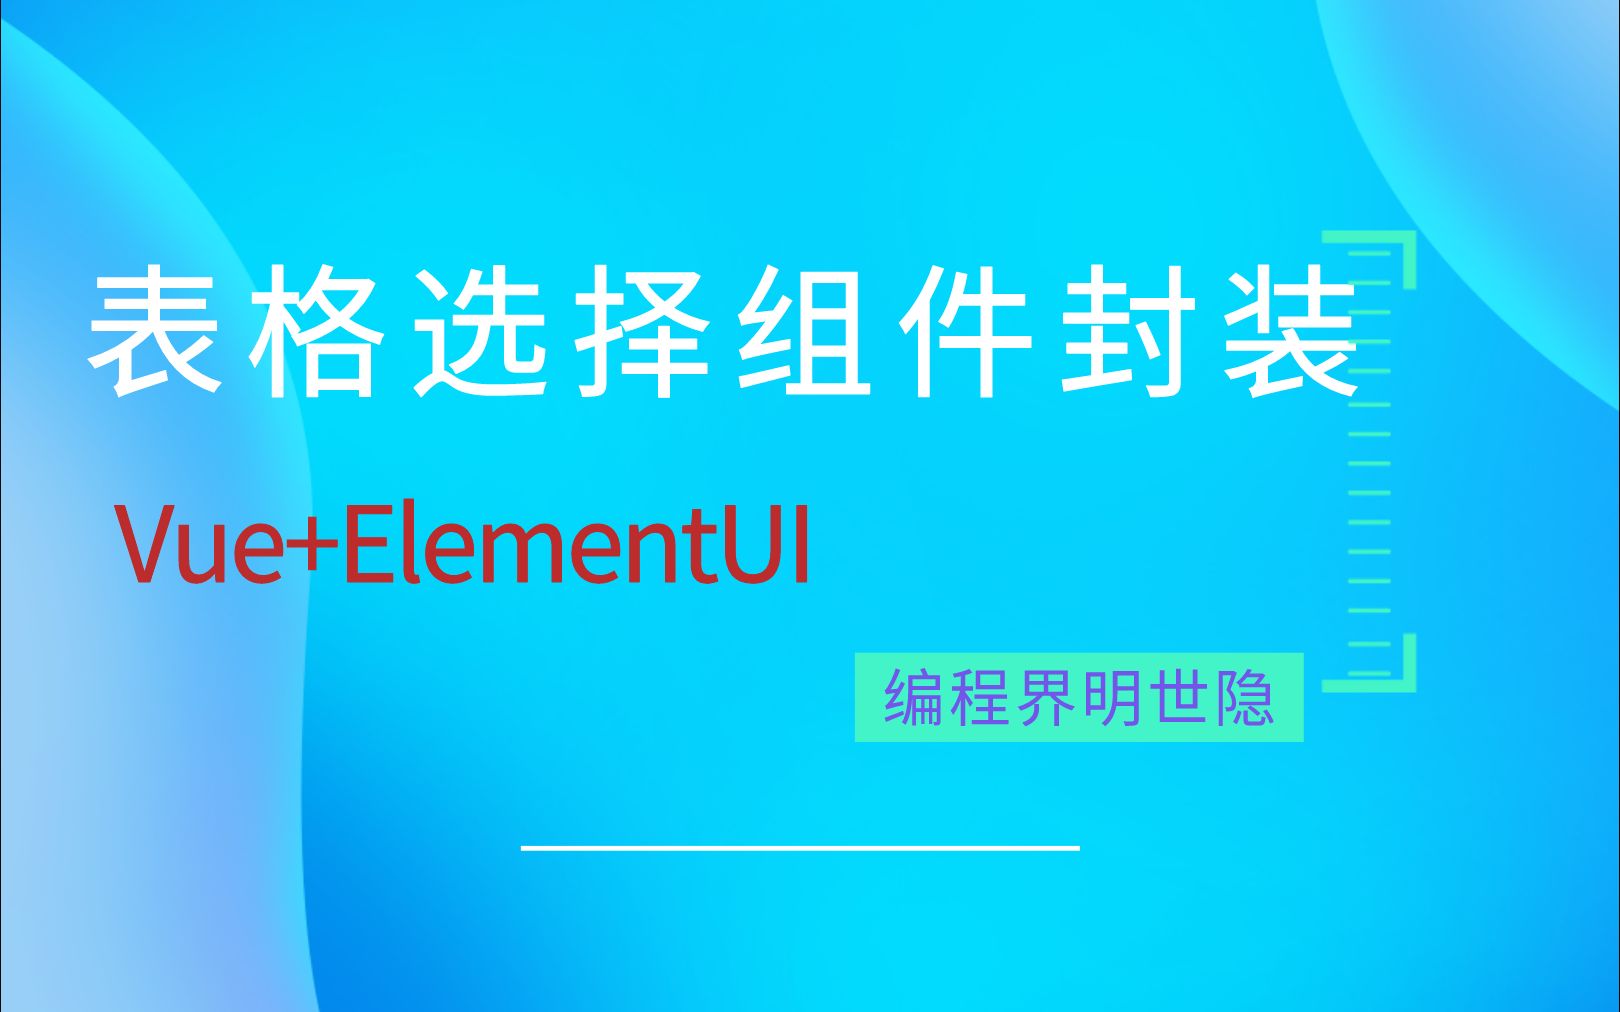 Vue+ElementUI 表格选择组件的封装